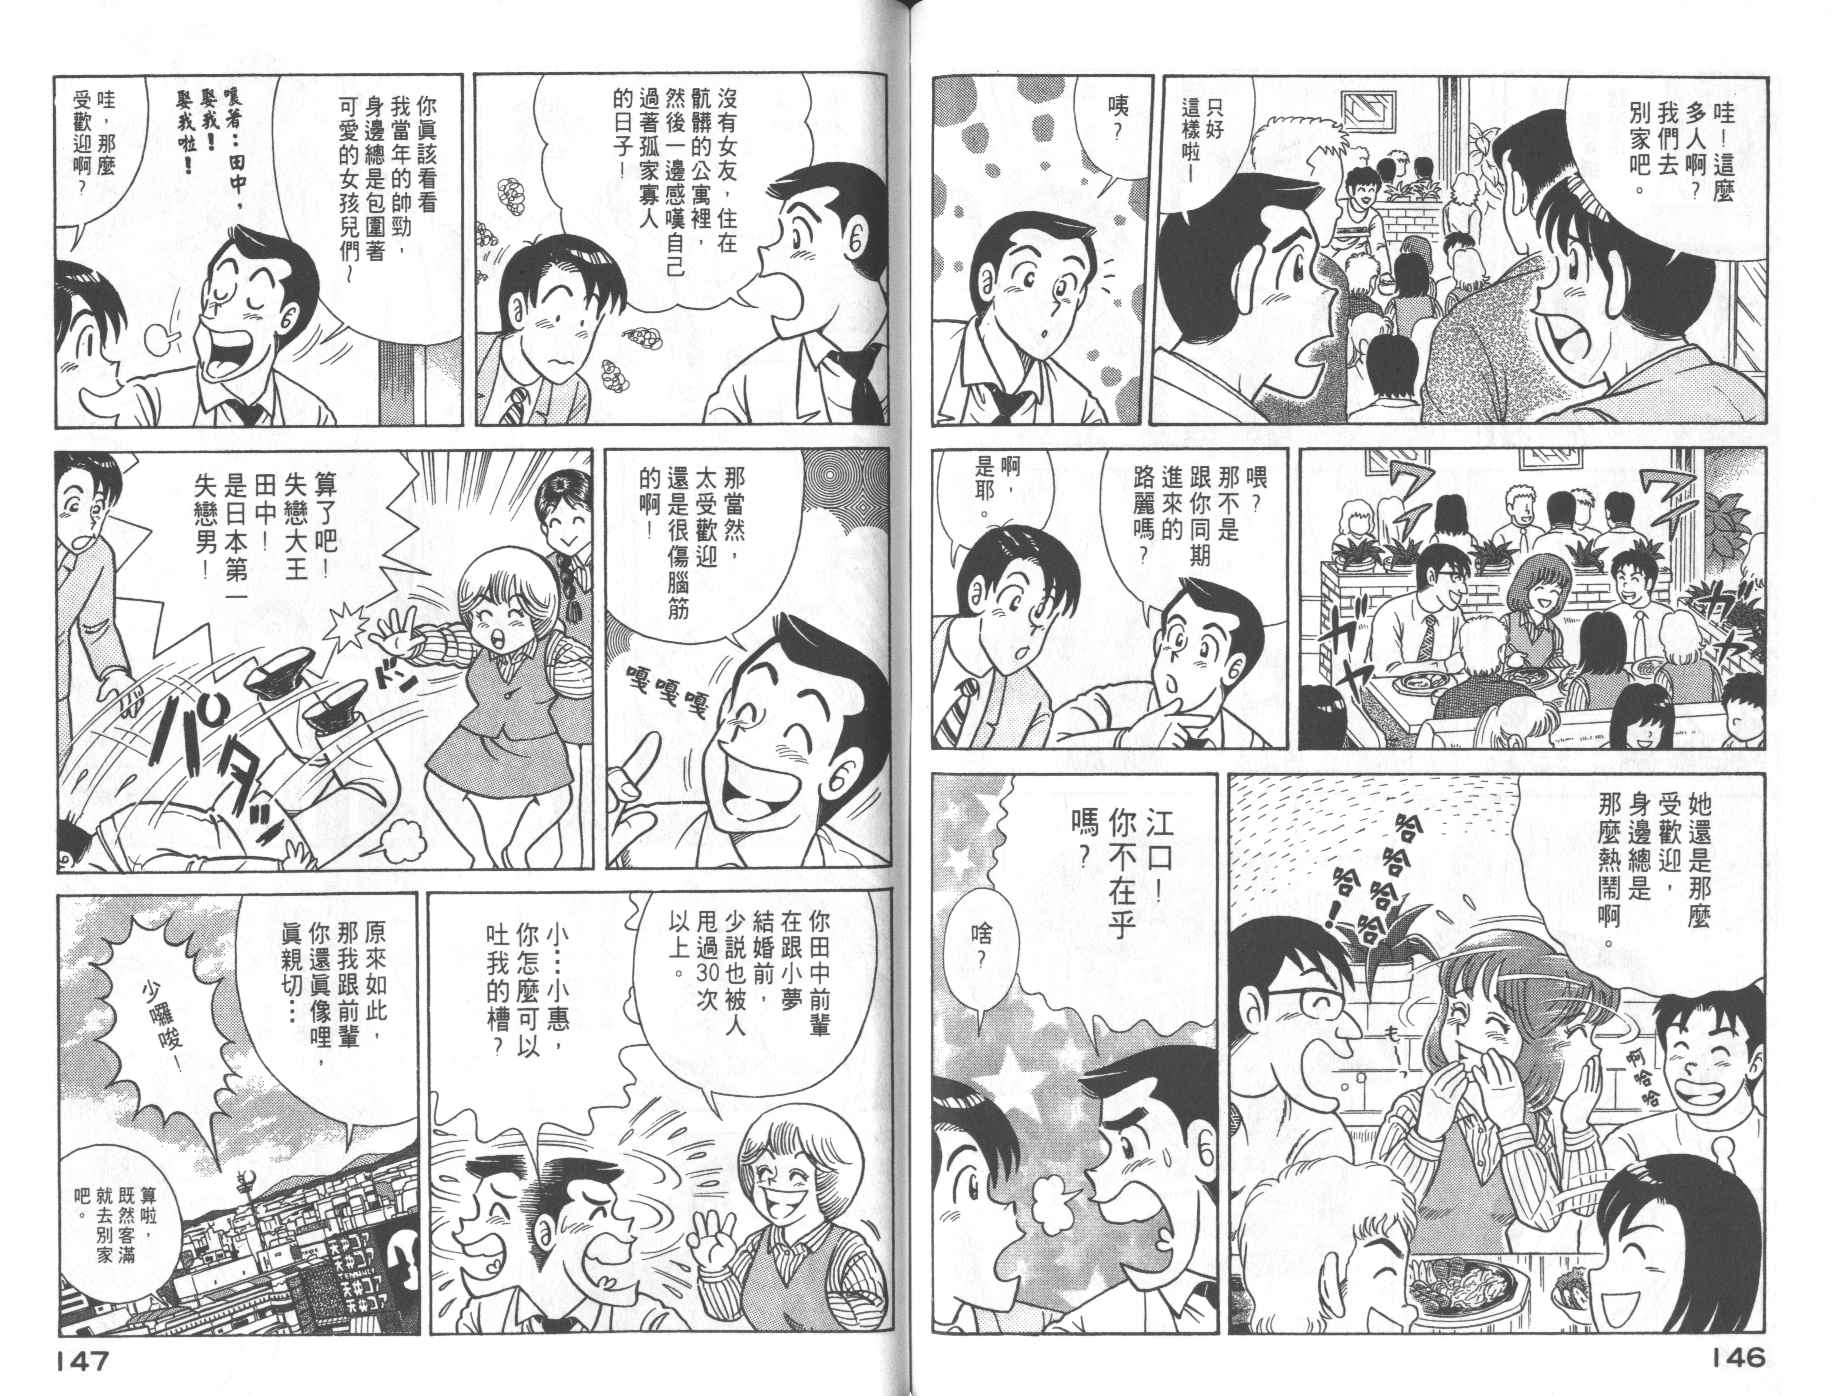 妙廚老爹 - 第68卷(2/2) - 1